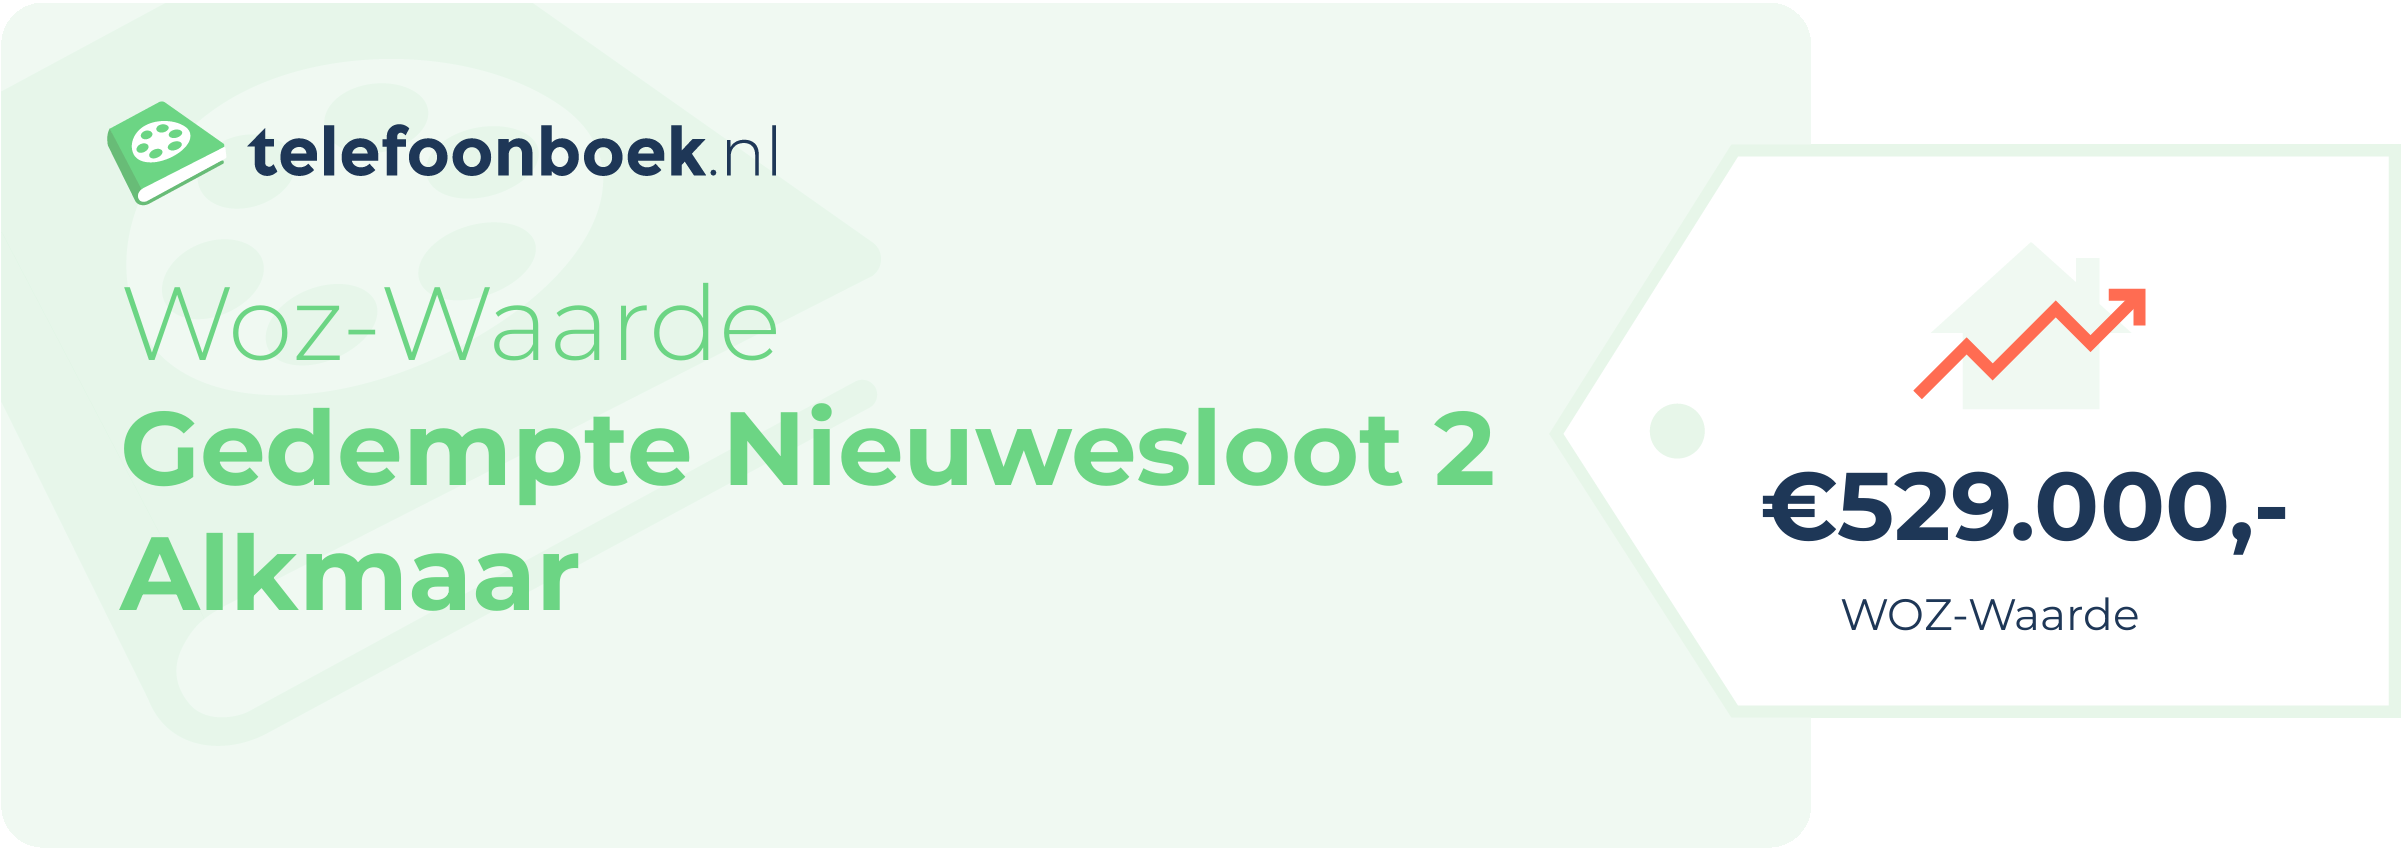 WOZ-waarde Gedempte Nieuwesloot 2 Alkmaar